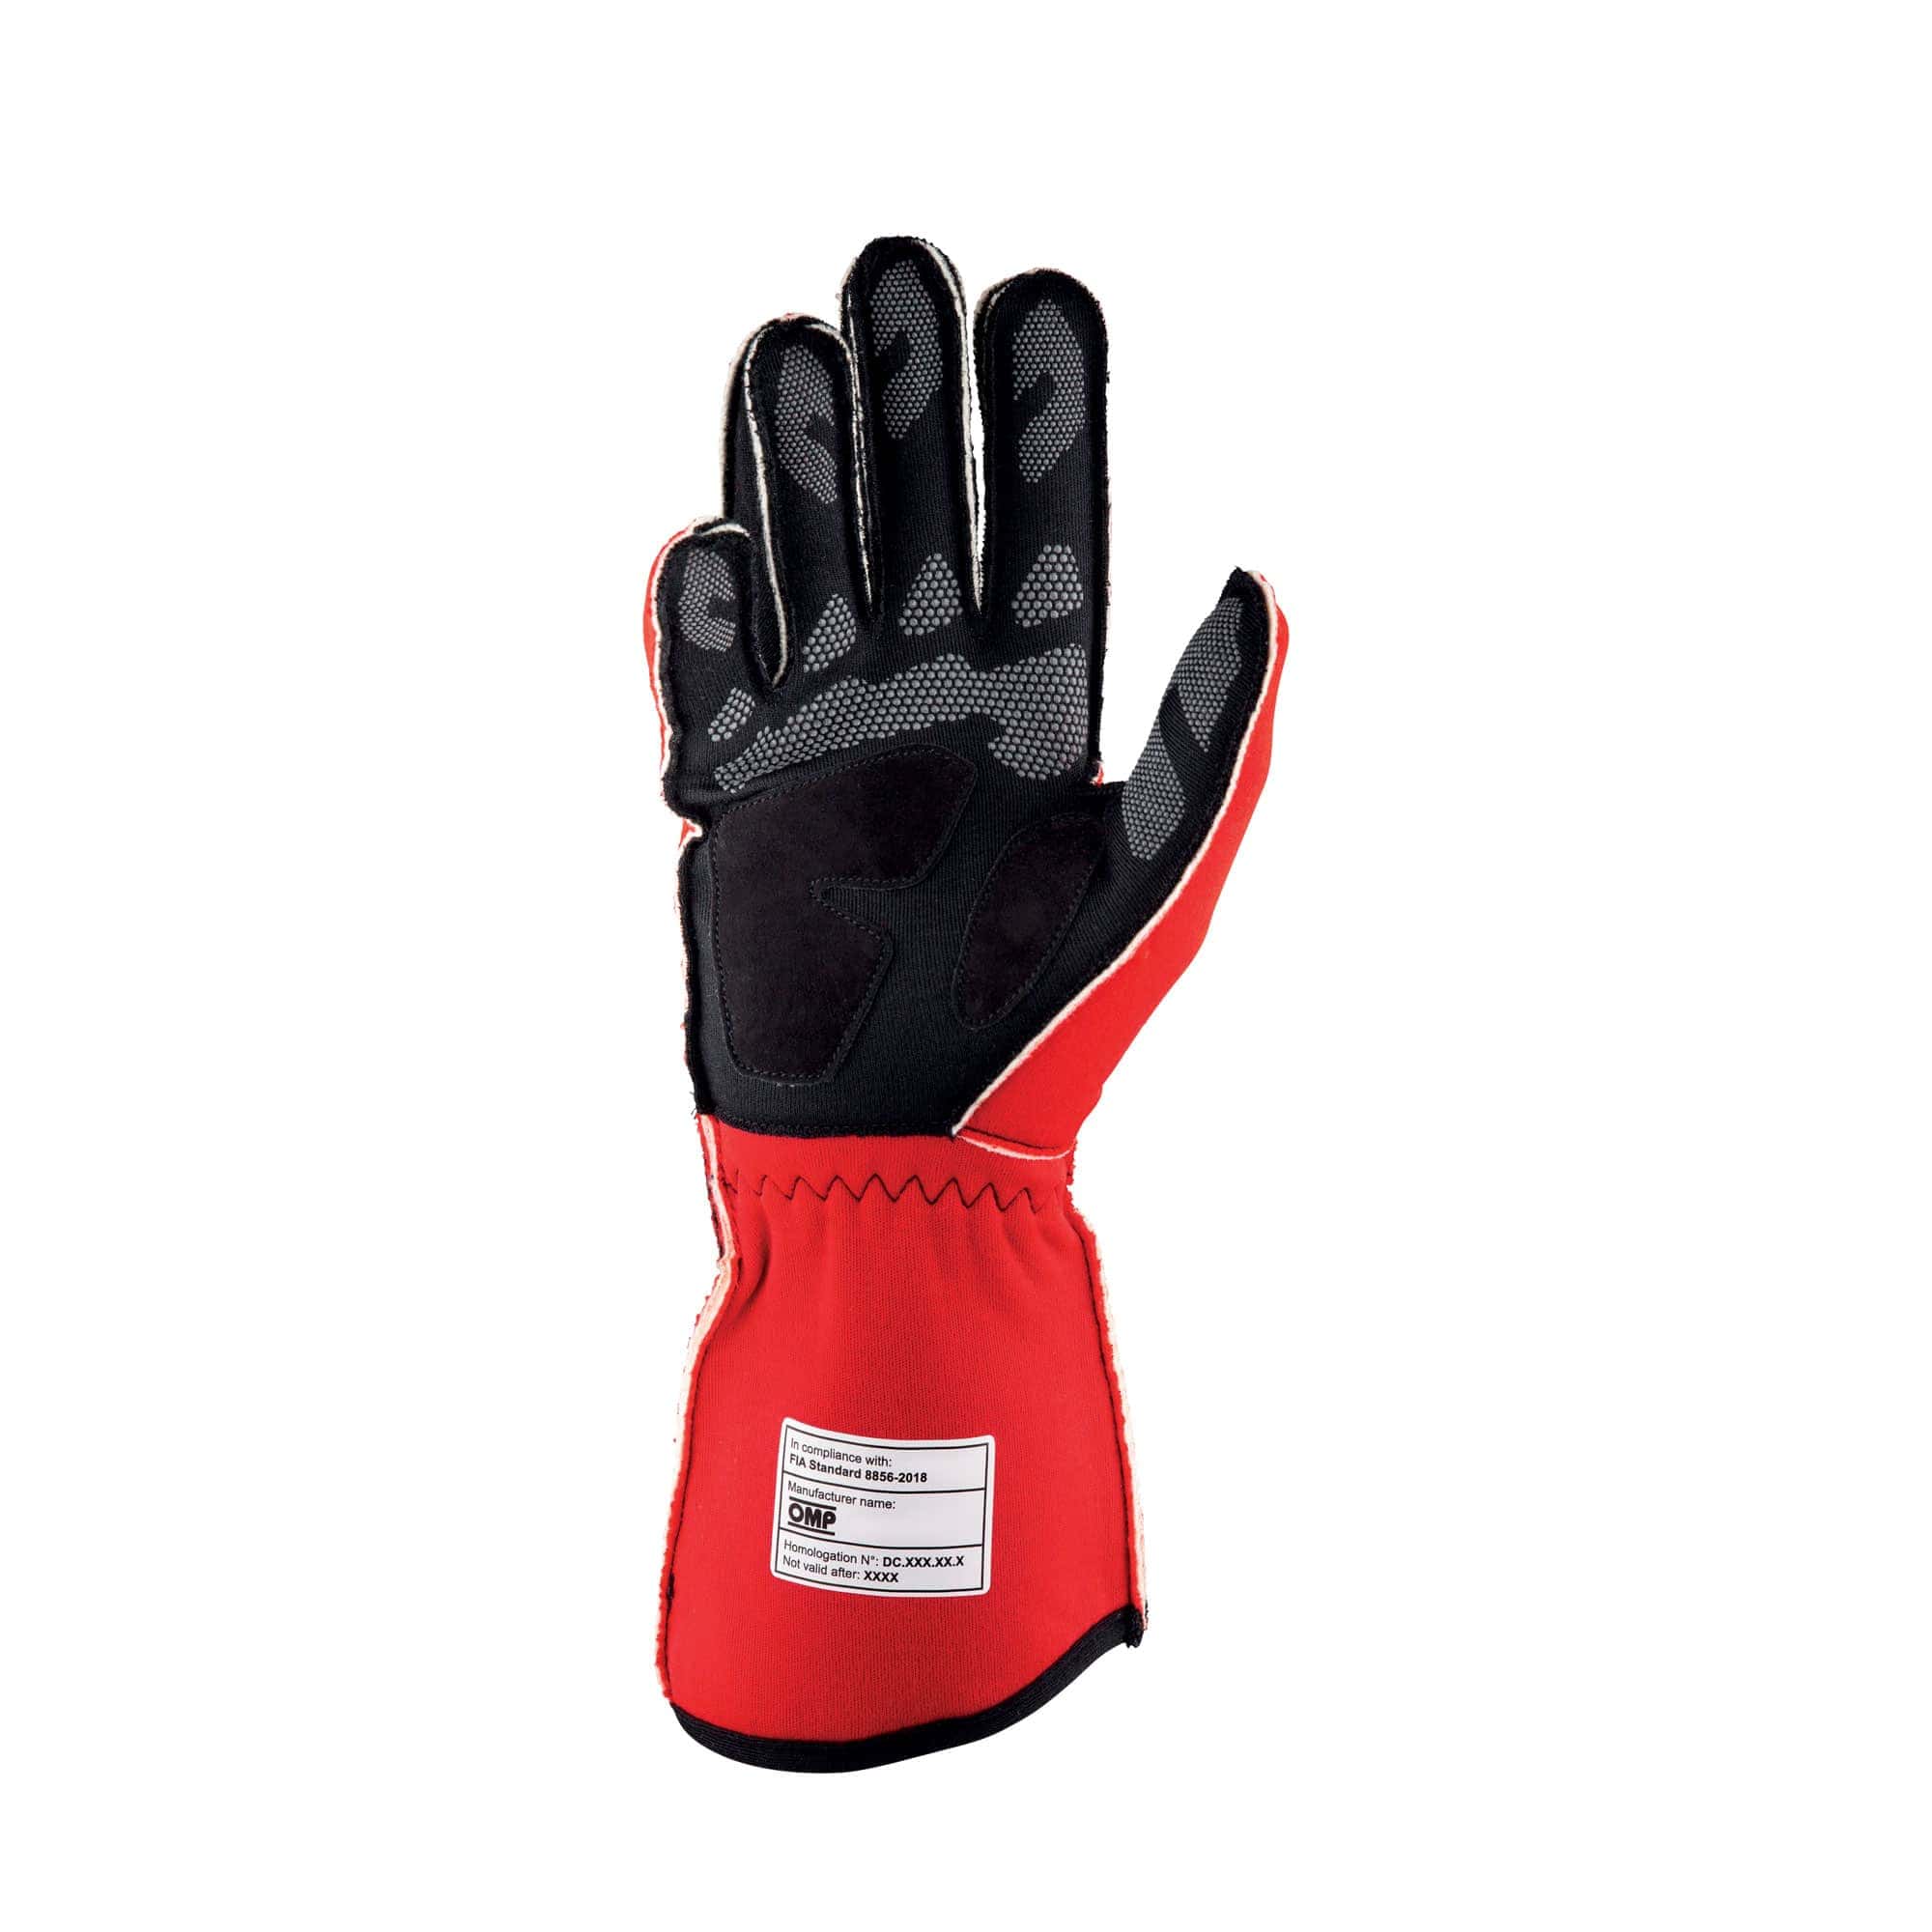 Guanti-Tecnica-Gloves-Omp-Rosso-IB-772-R-rear